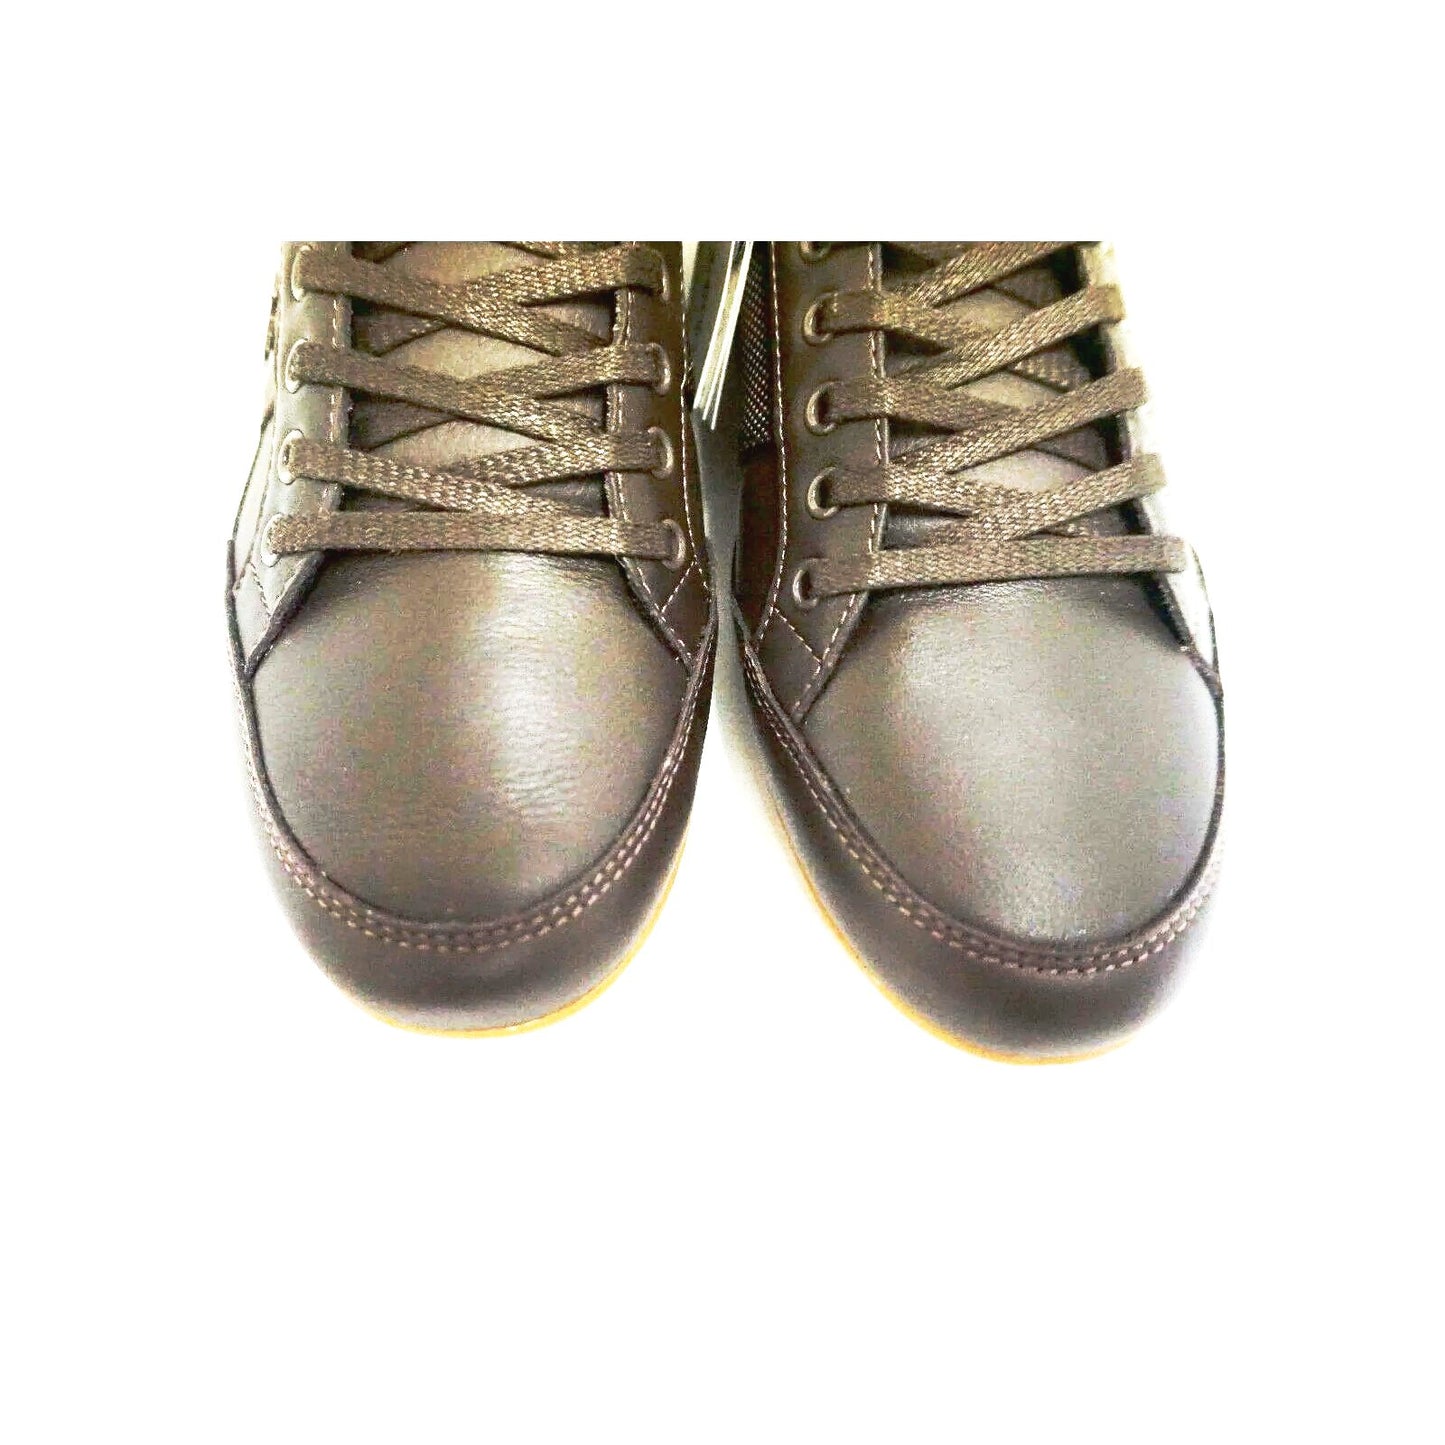 Lacoste men shoes chaymon 116 1 spm leather dark brown black size 8.5 new